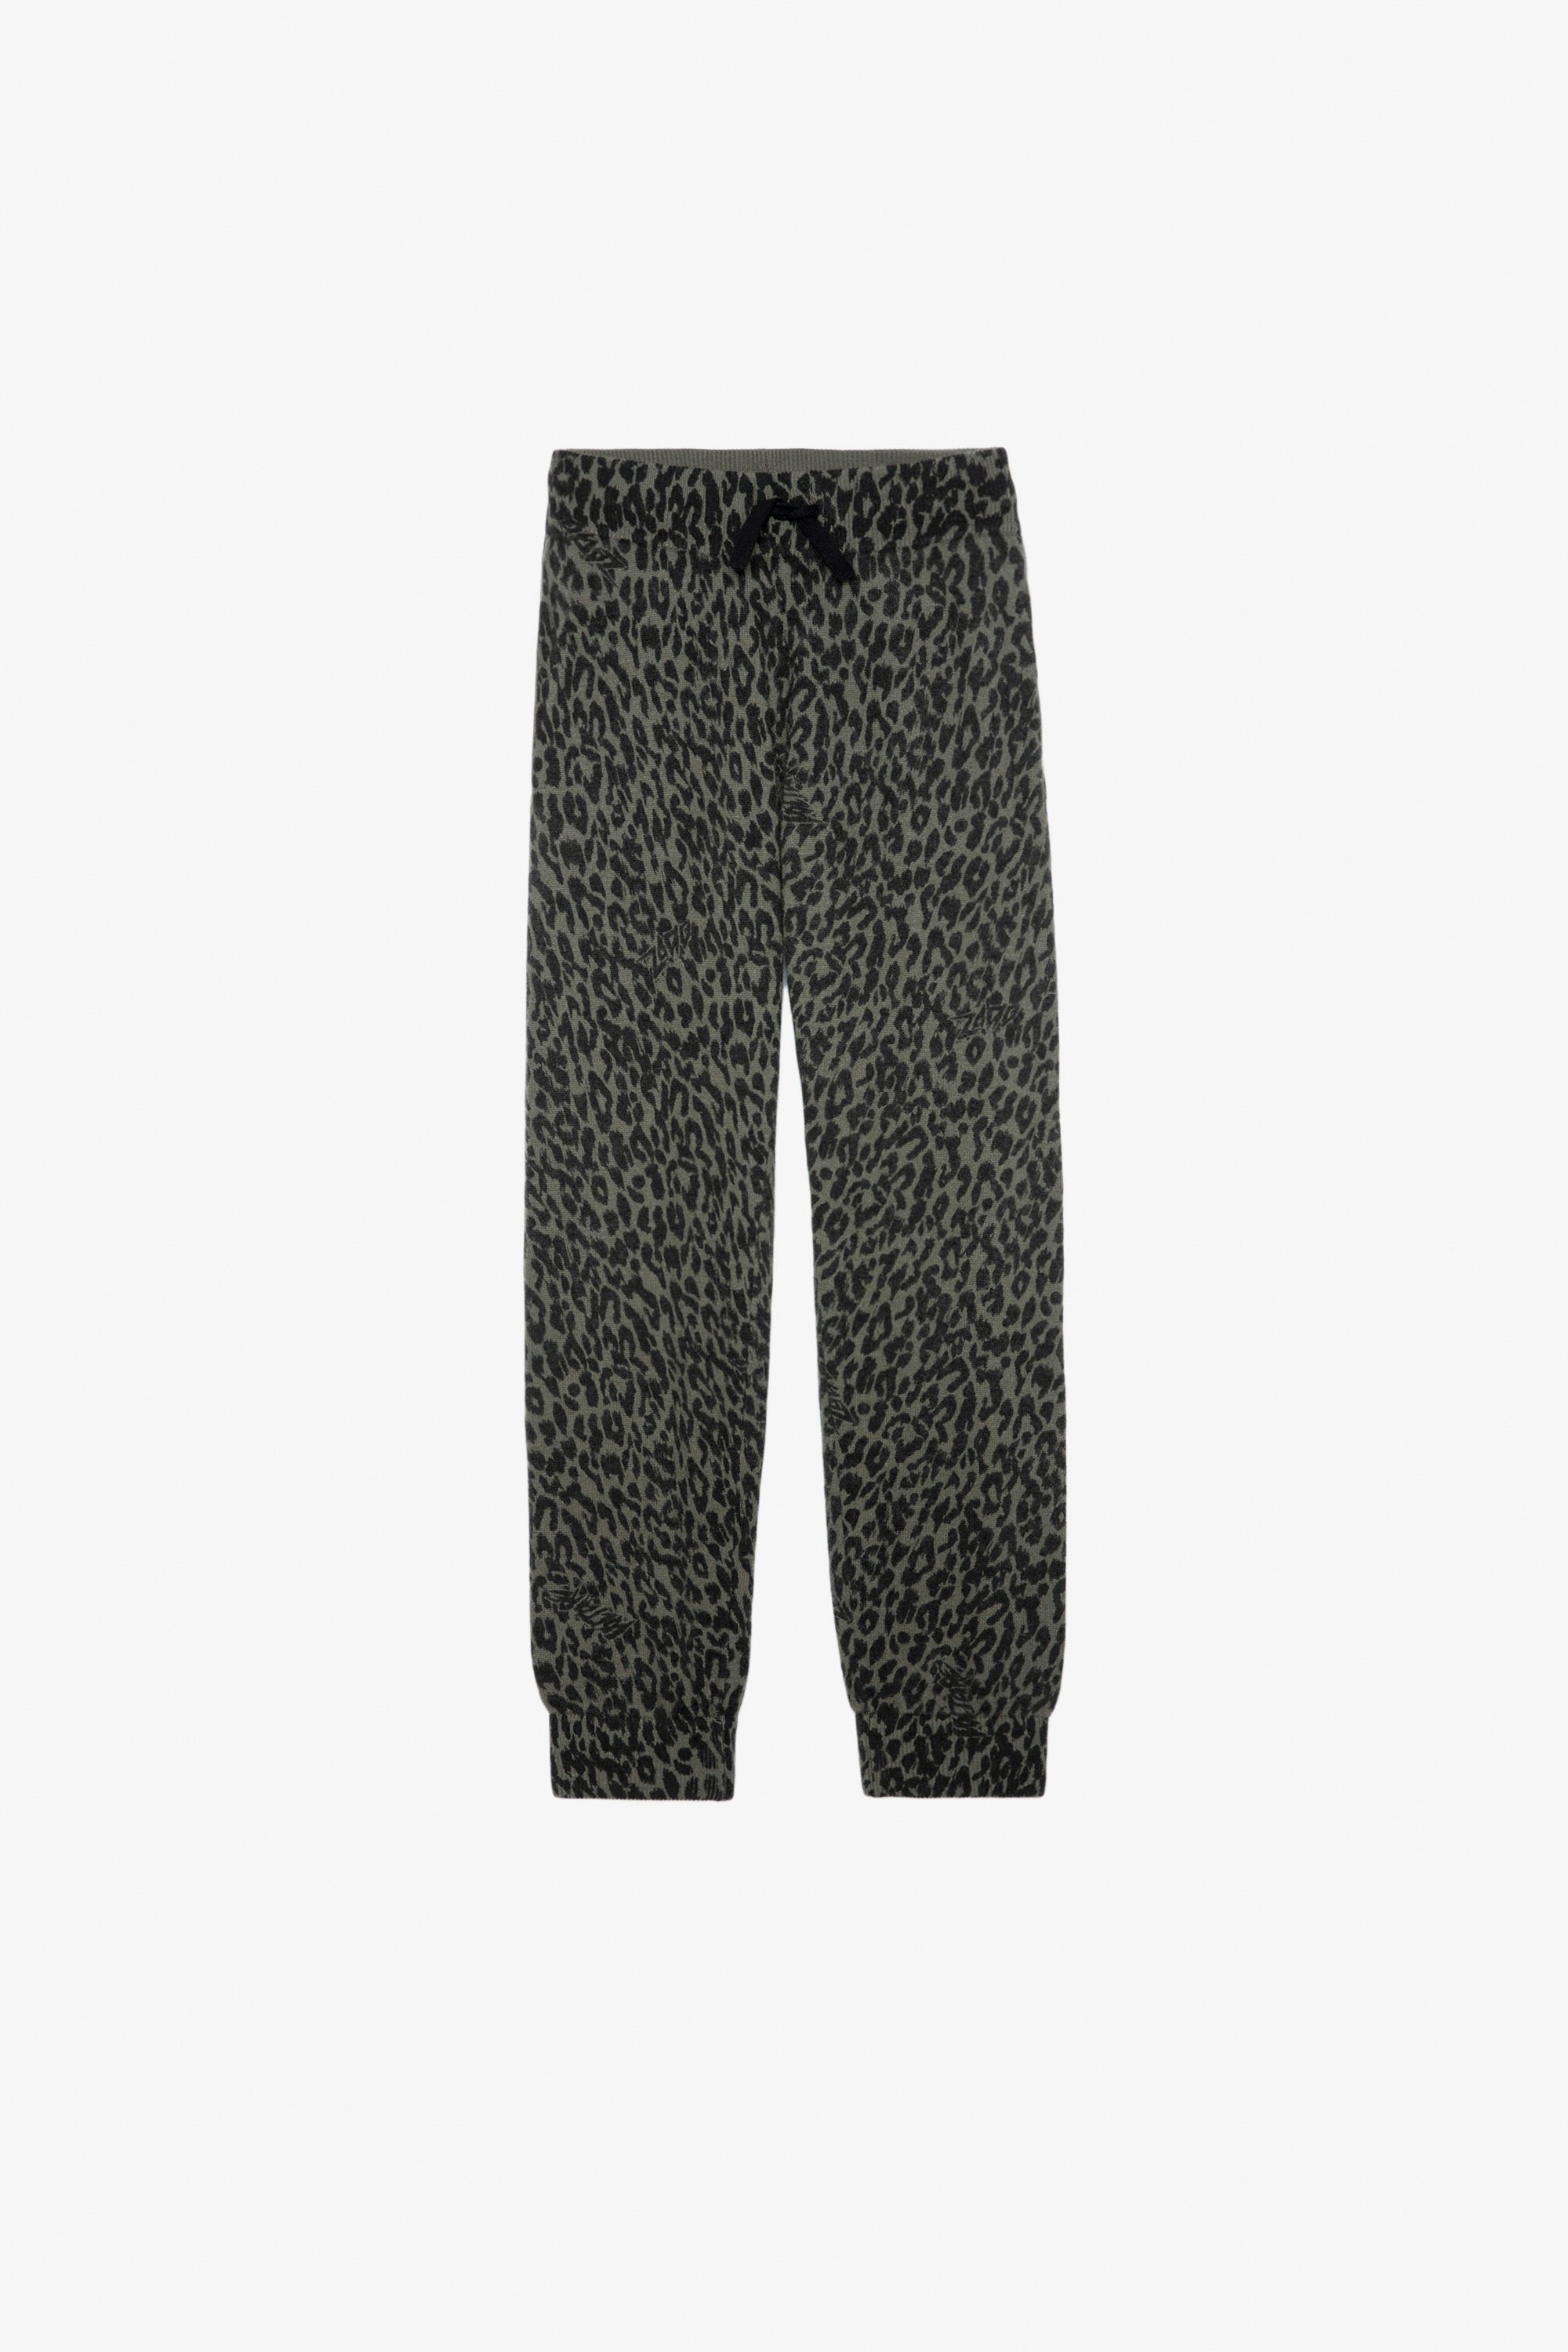 Steevy Girls’ Trousers Girls’ khaki knit trousers